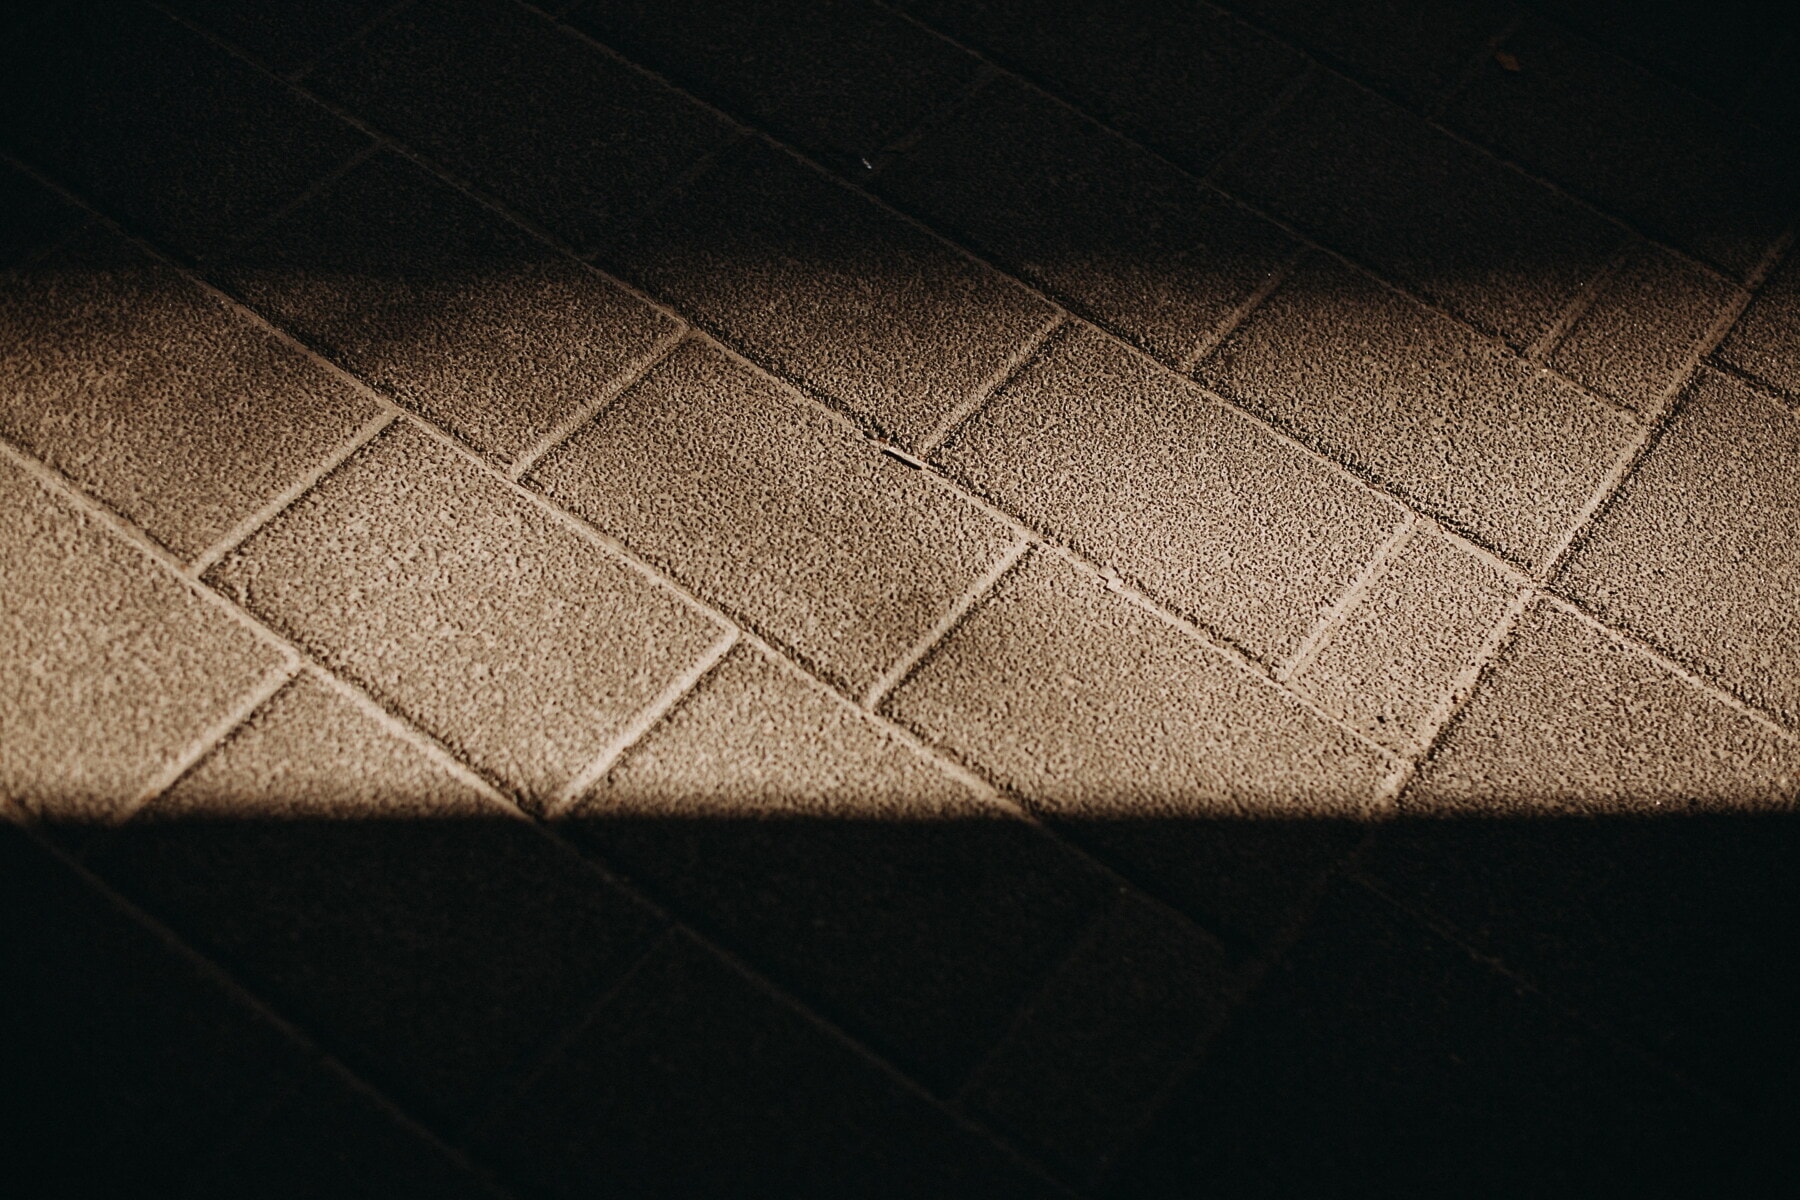 darkness, concrete, bricks, pavement, shadow, block, texture, rectangle, square, material